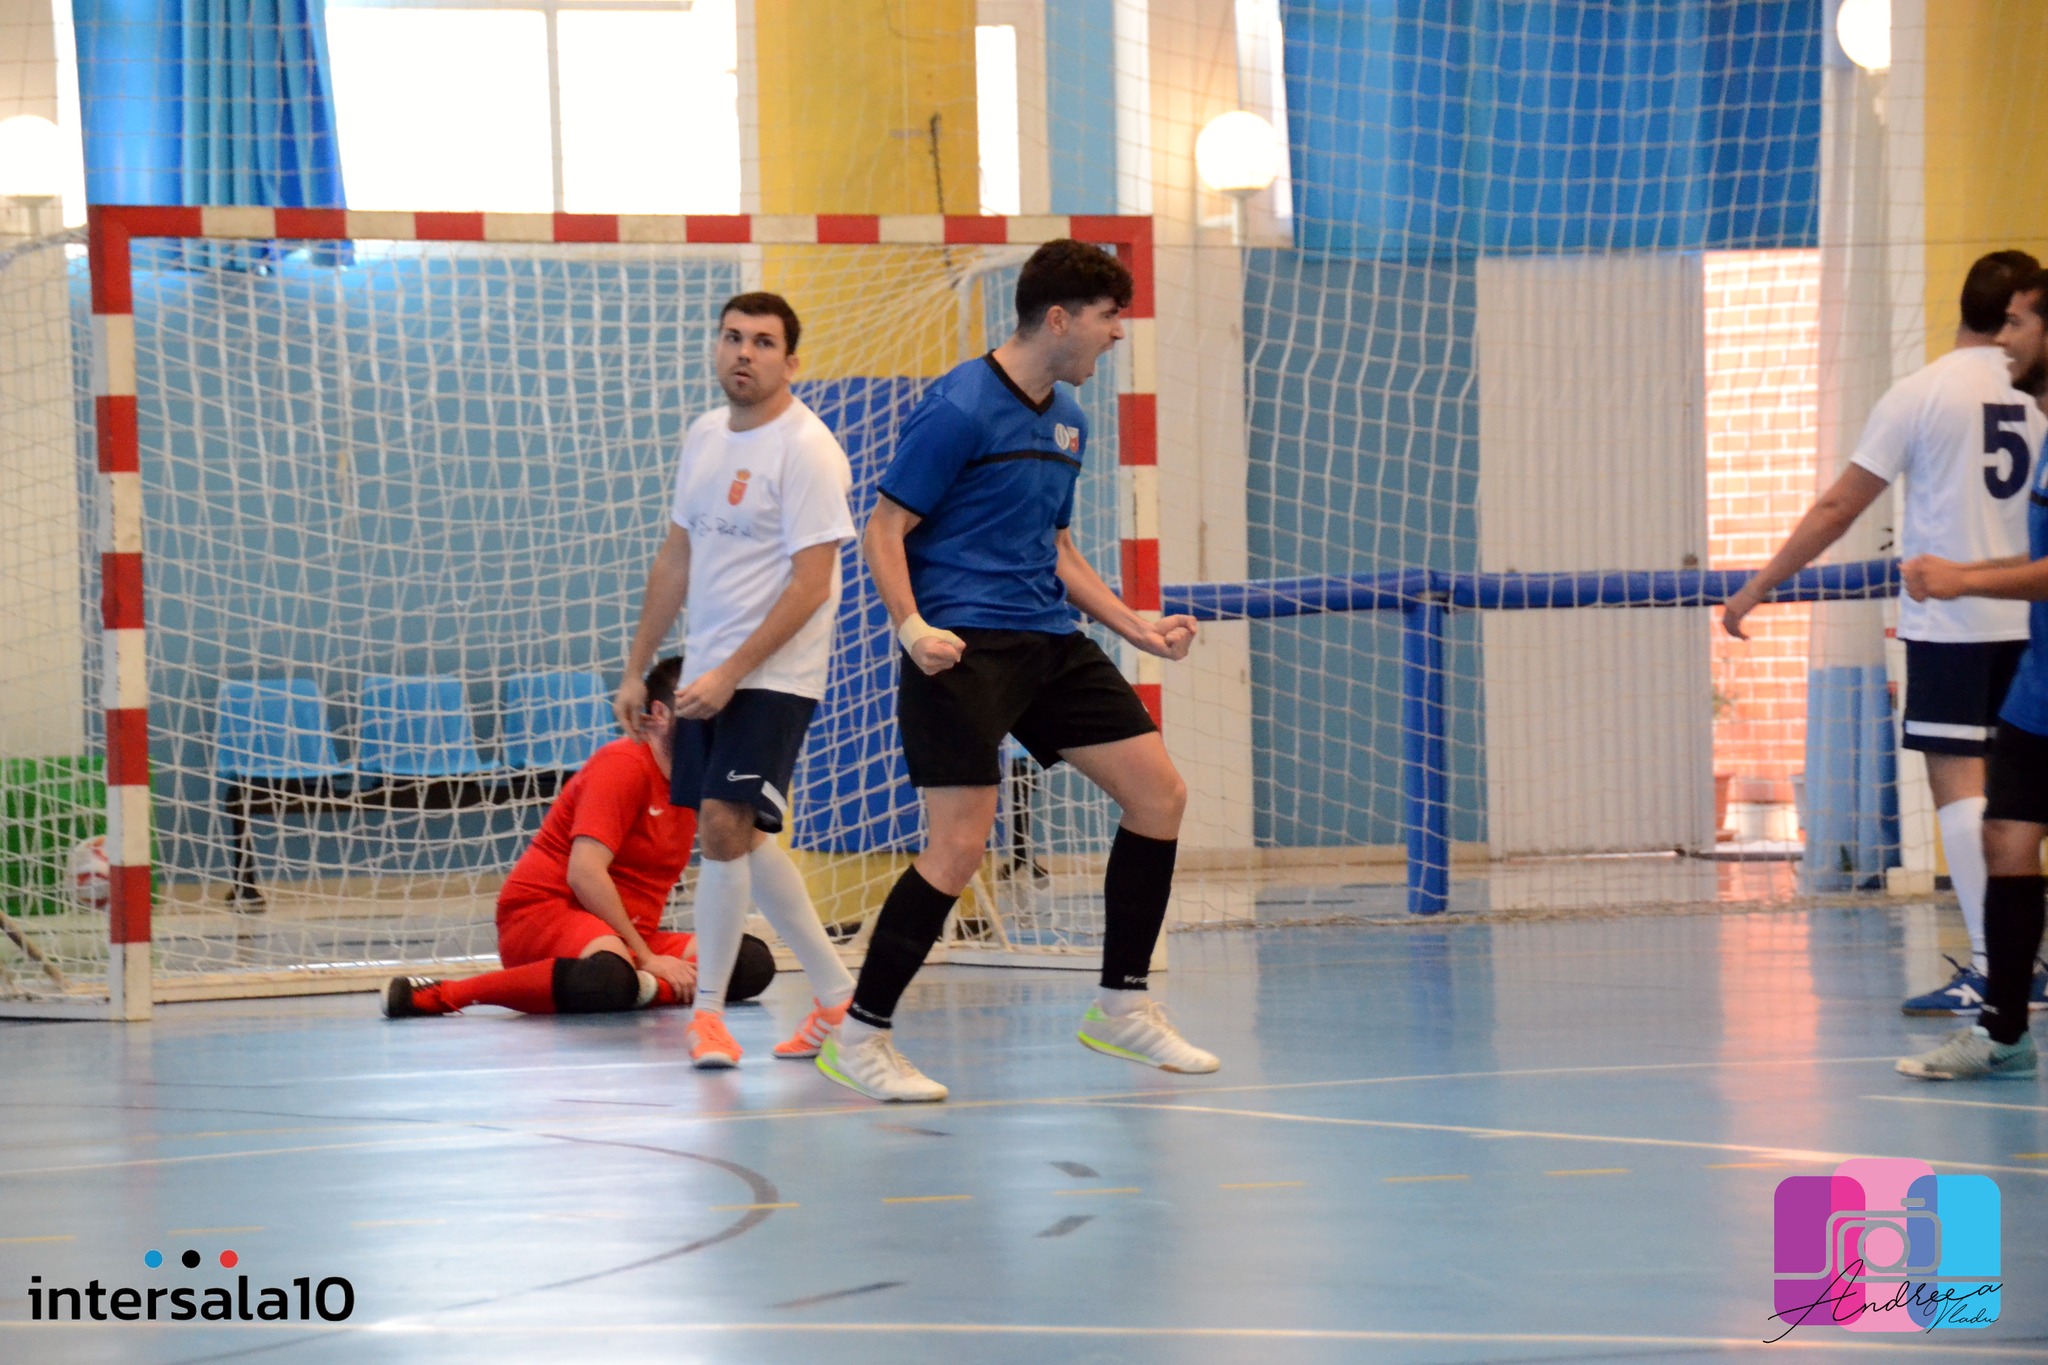 InterSala 10 Zaragoza (Autonómica masculino) 3-0 Gurrea Futsal – Jornada 6